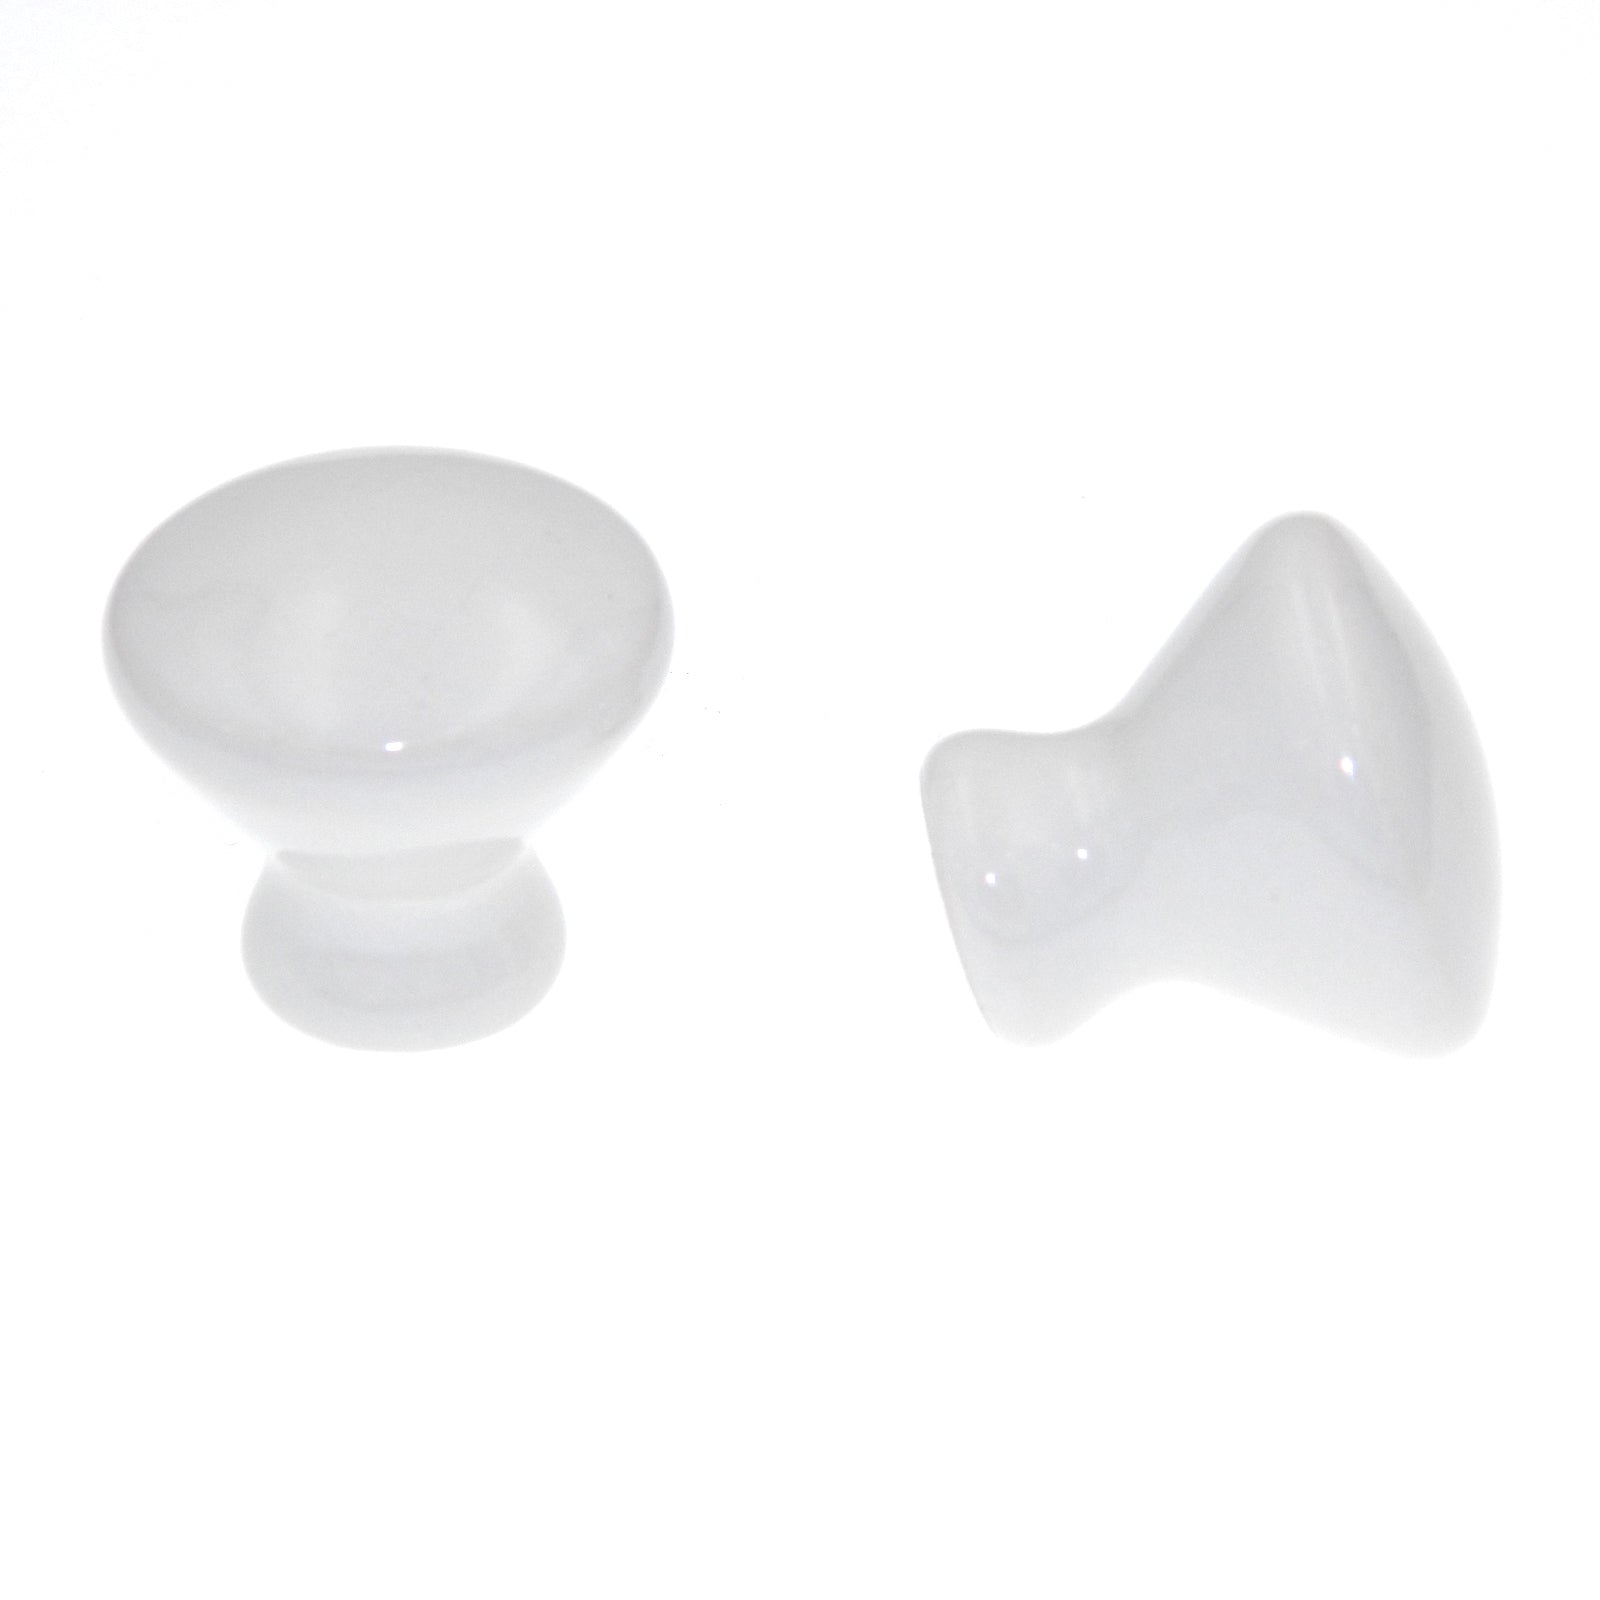 Pair of Amerock BP725-30 White 1 5/16" Ceramic Cabinet Knob Pulls